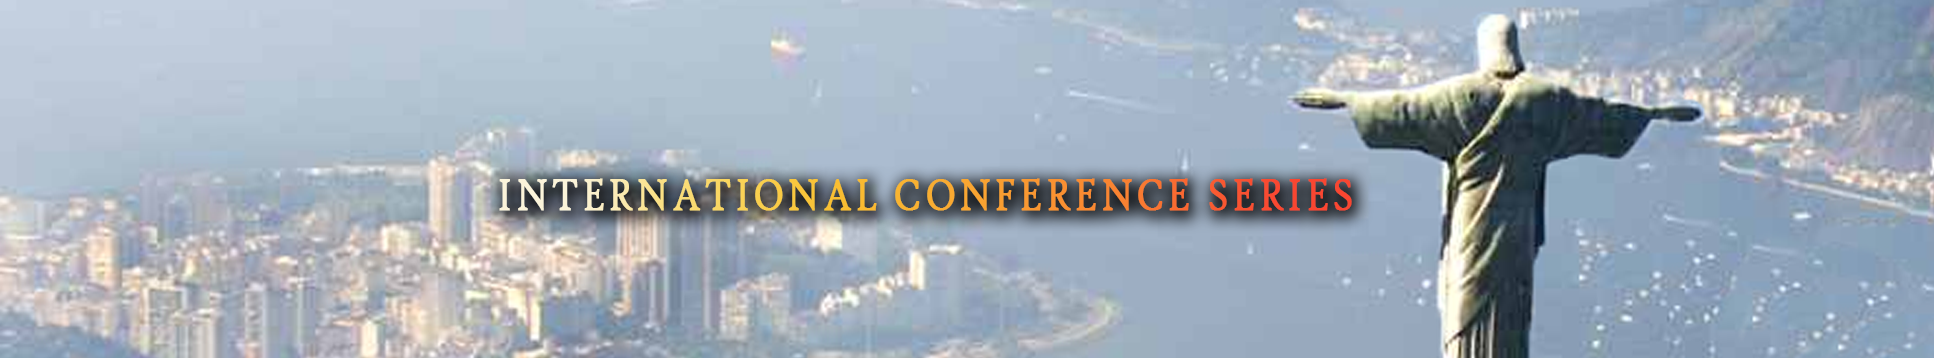 InternationalConferenceSeries_channel_banner